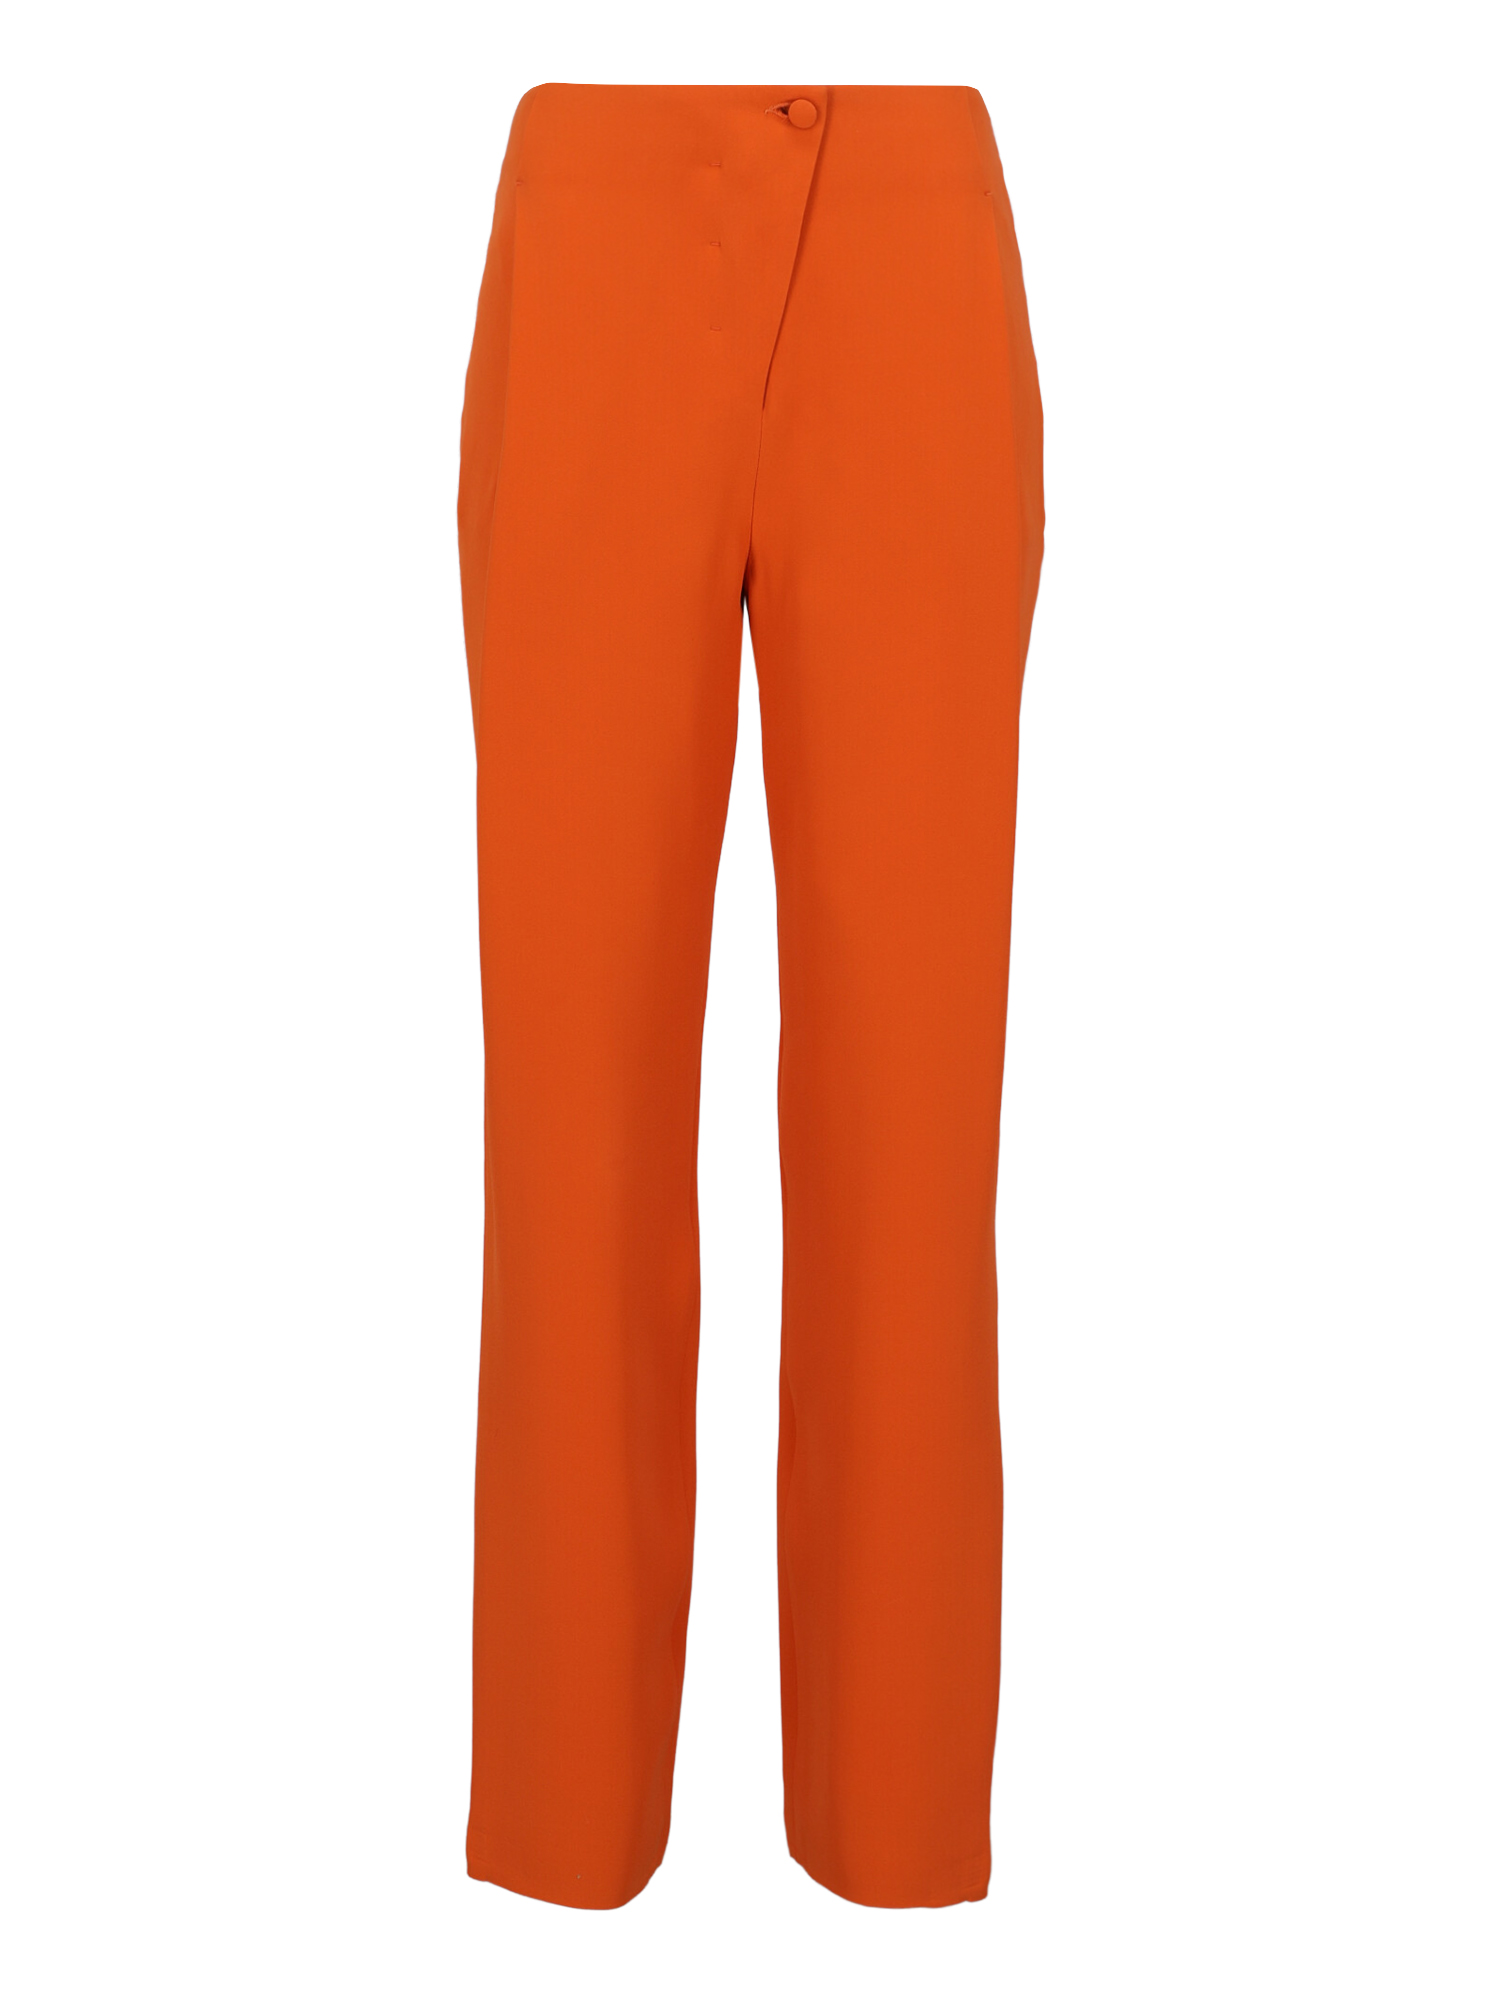 Condition: Very Good, Solid Color Cotton, Color: Orange - XS - IT 38 -